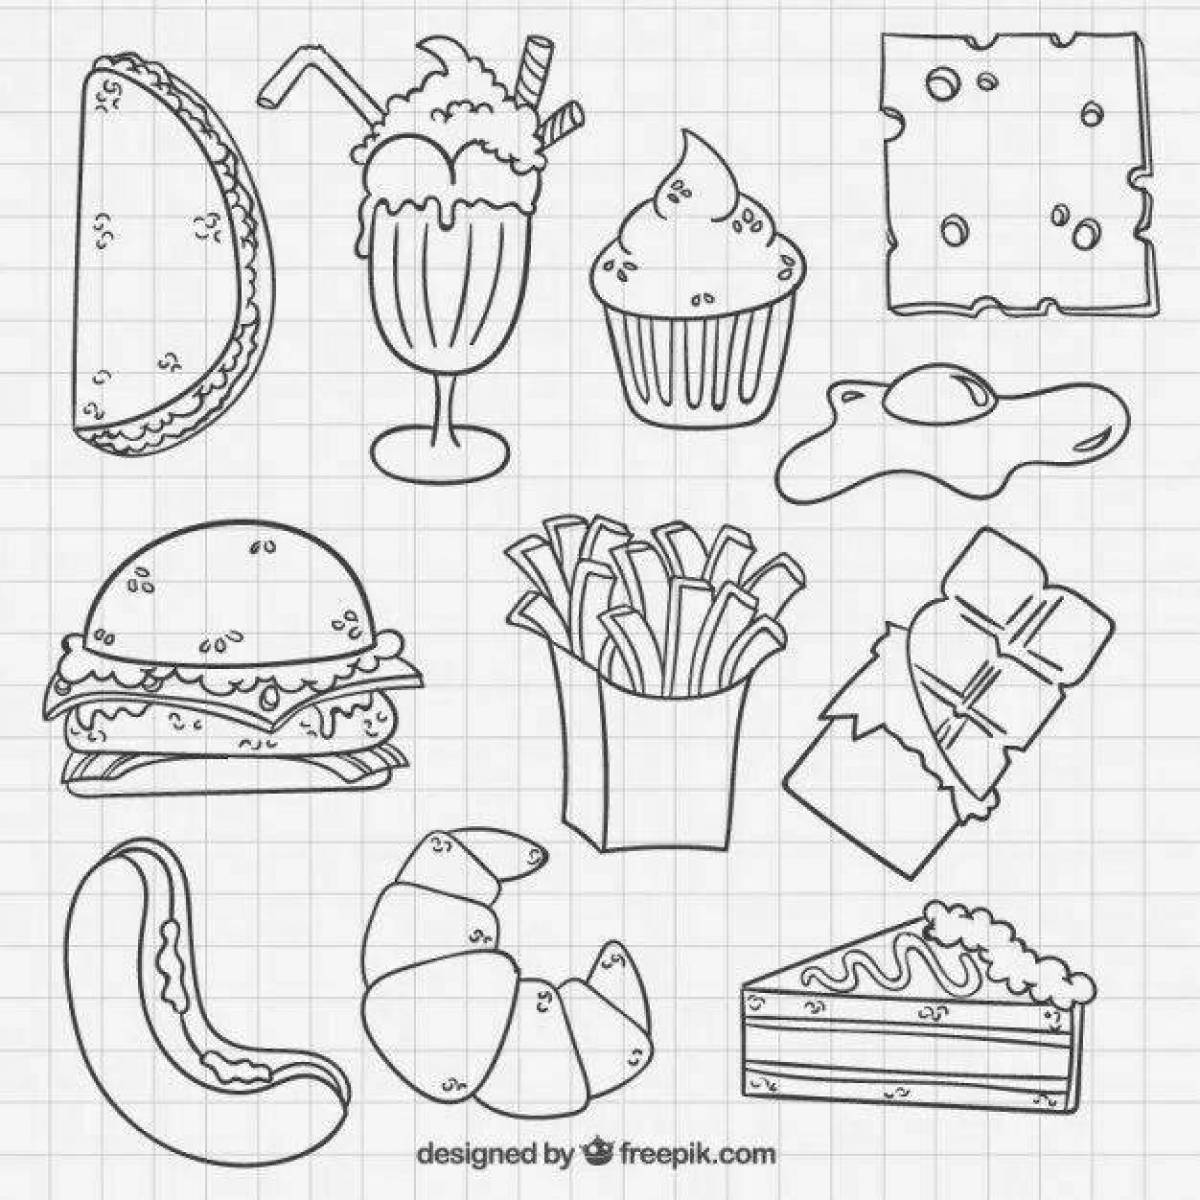 Joyful paper food coloring page